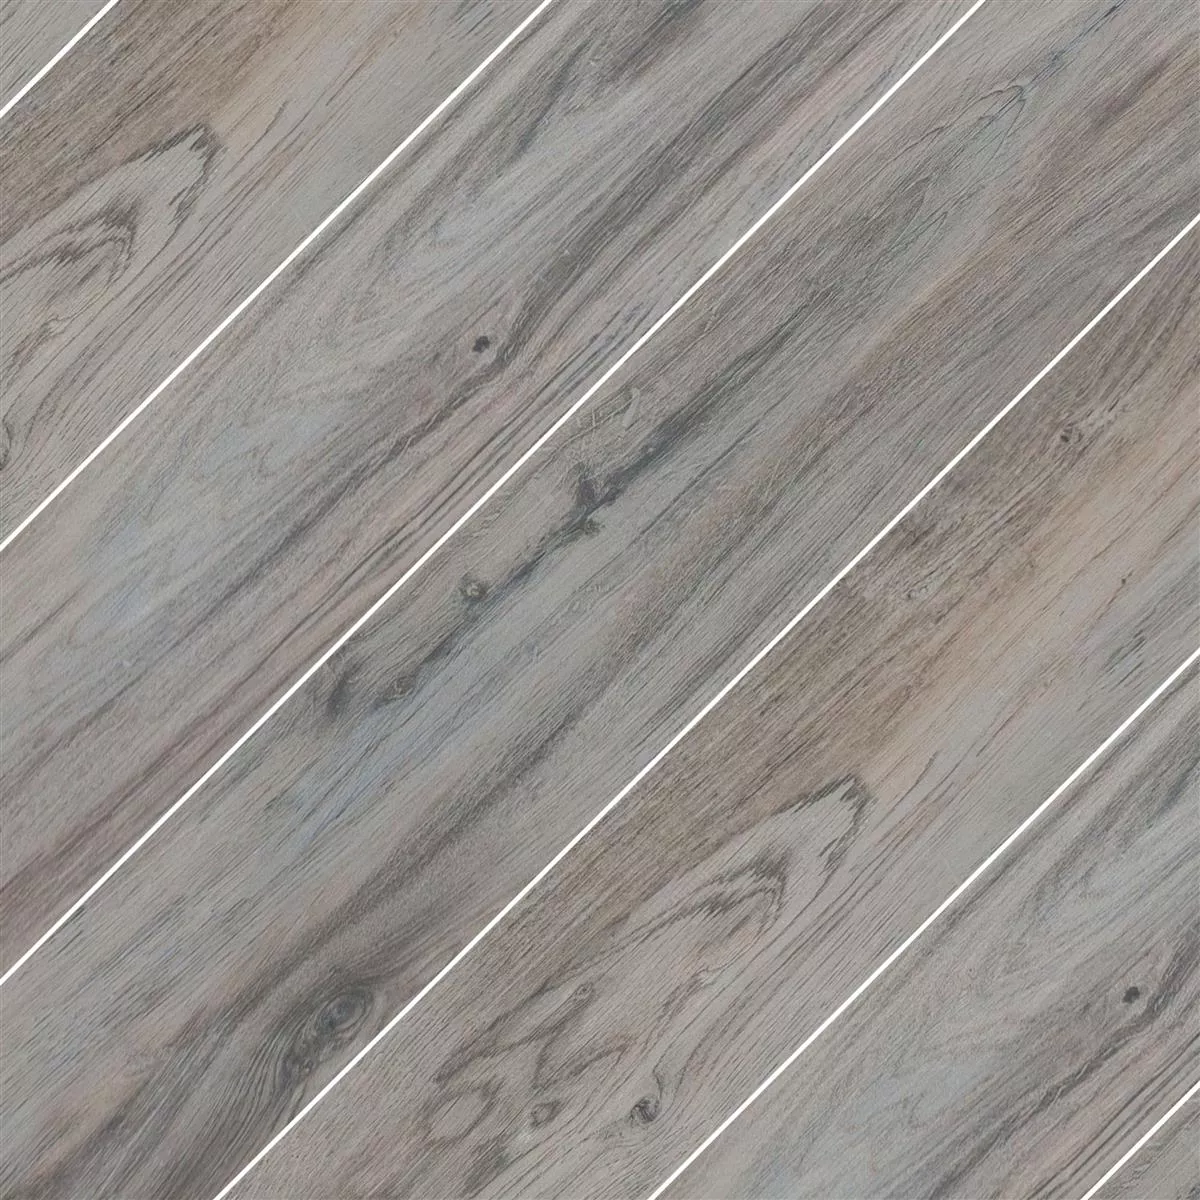 Ladrilhos Aparência de Madeira Fullwood Cinza 20x120cm